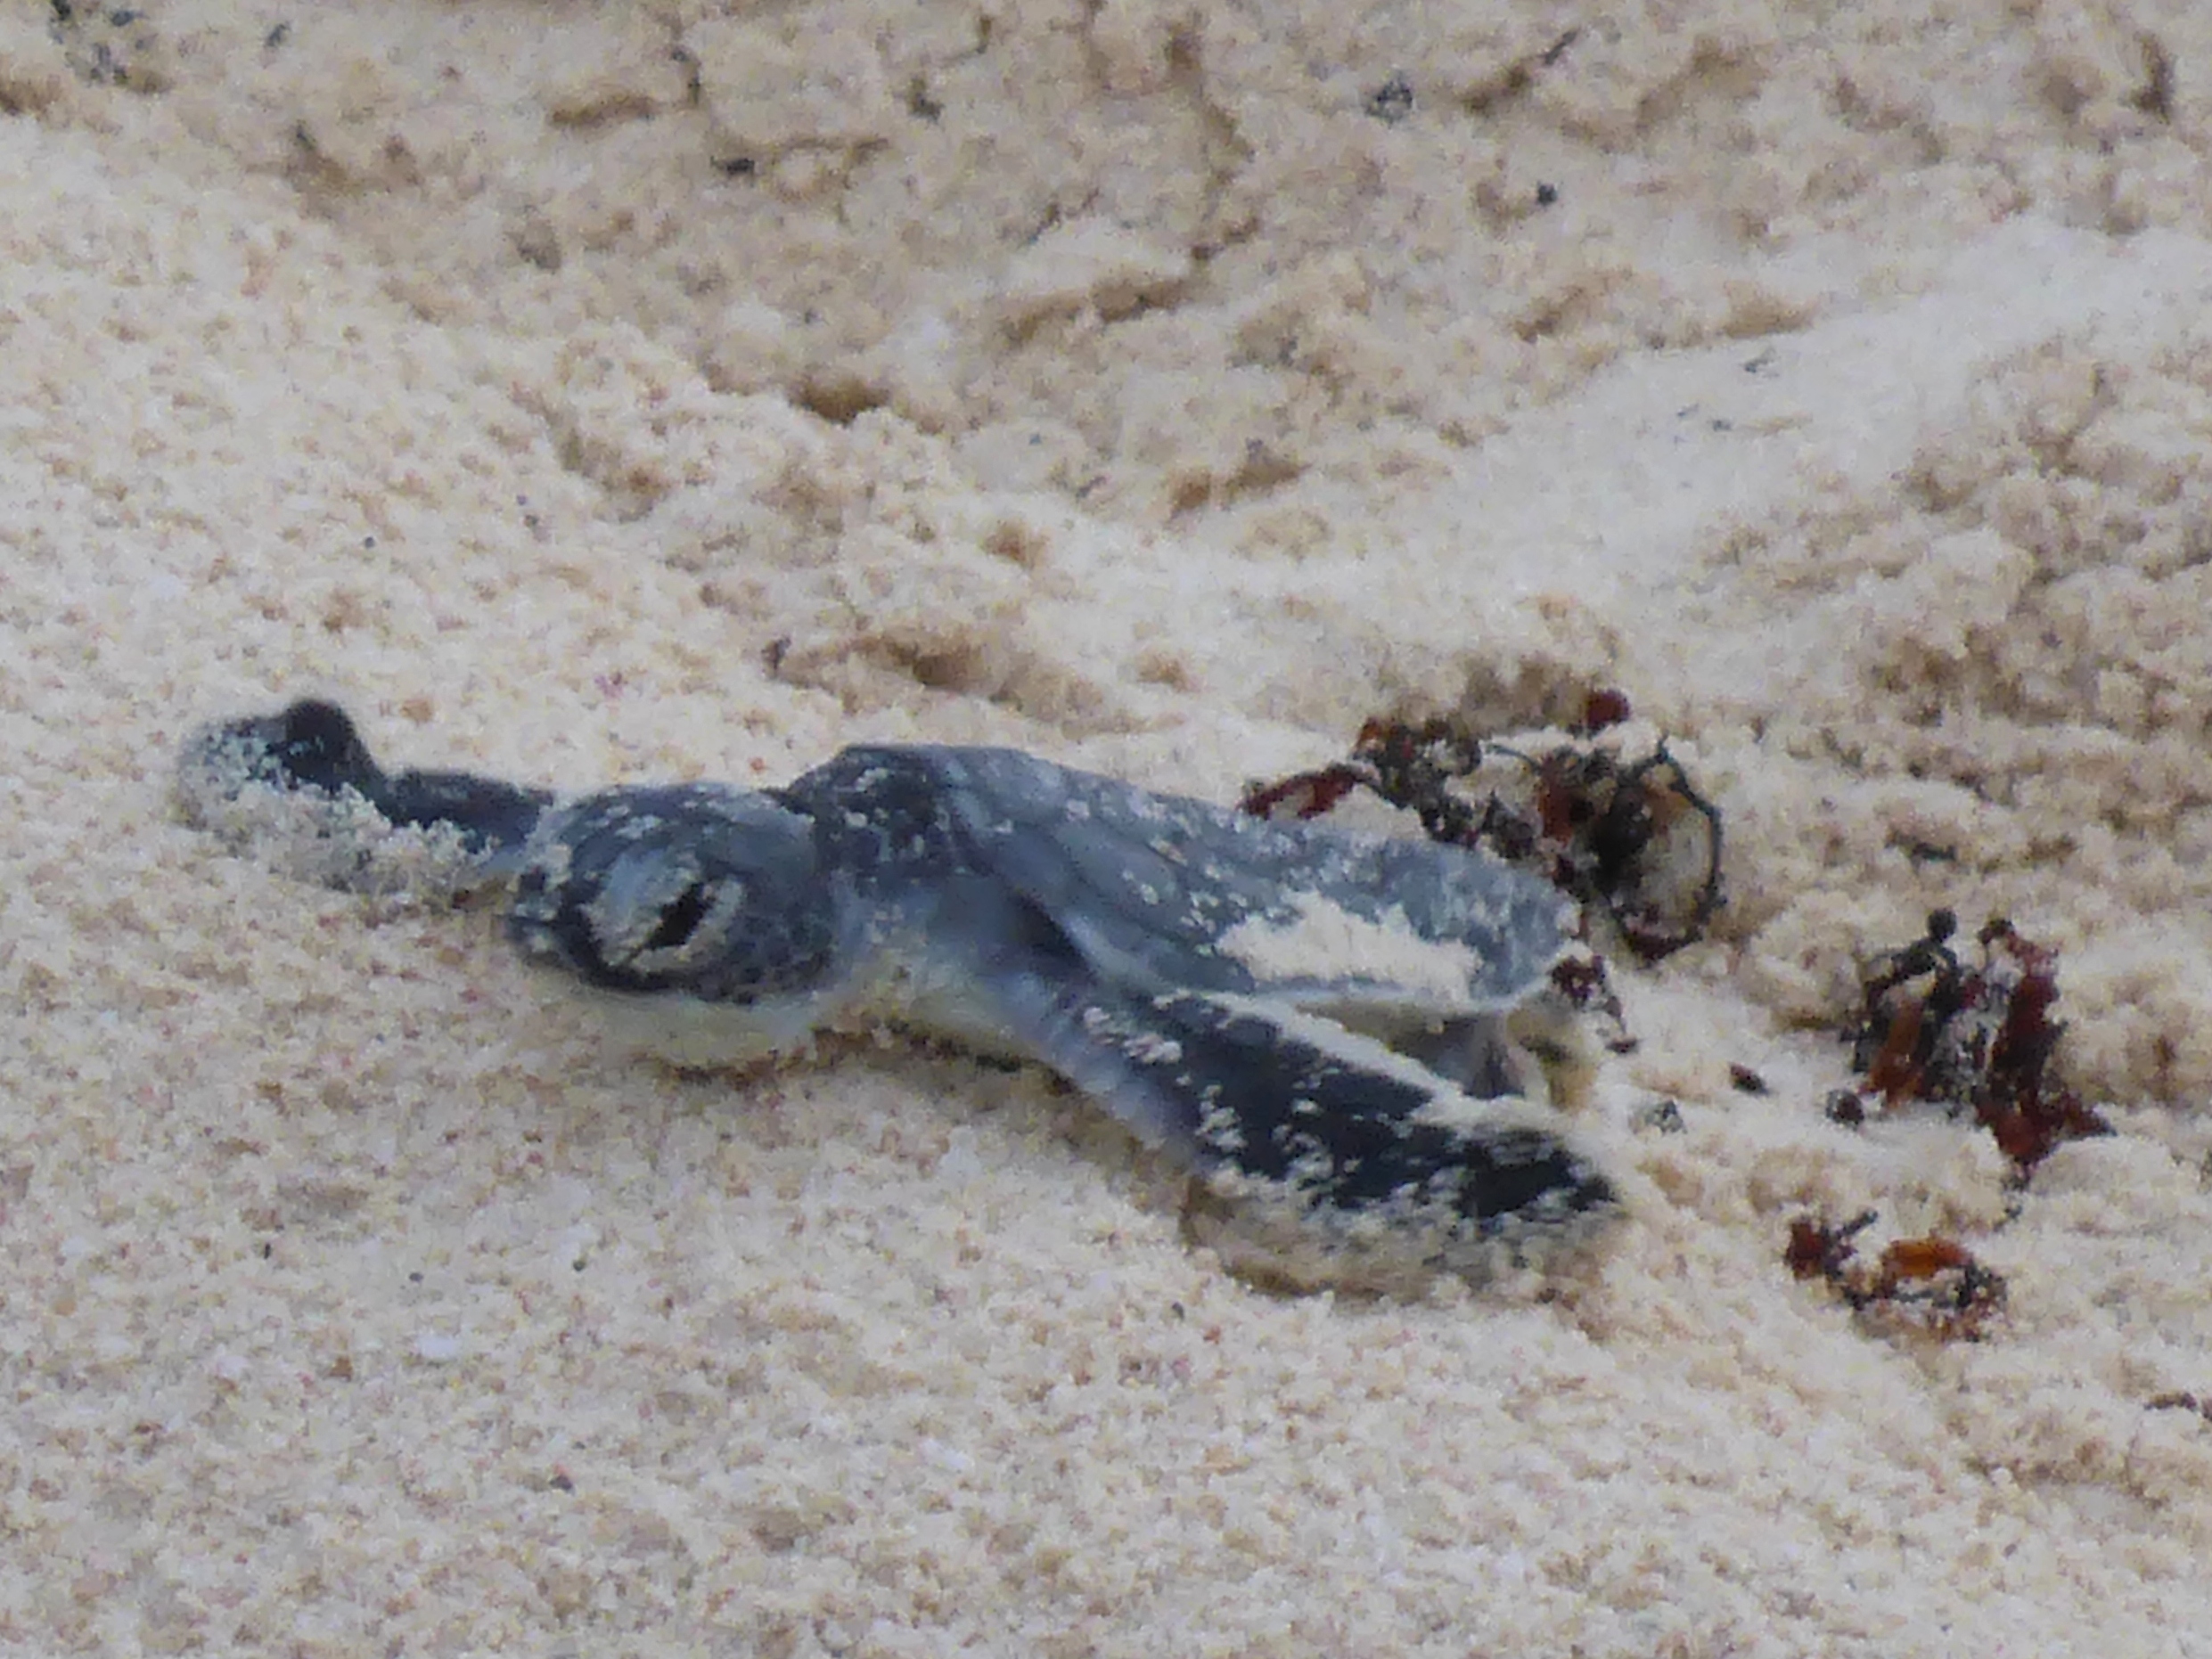 Amelia Lynch - The Everyday Journey Saving Sea Turtles At Last - The Everyday Journey